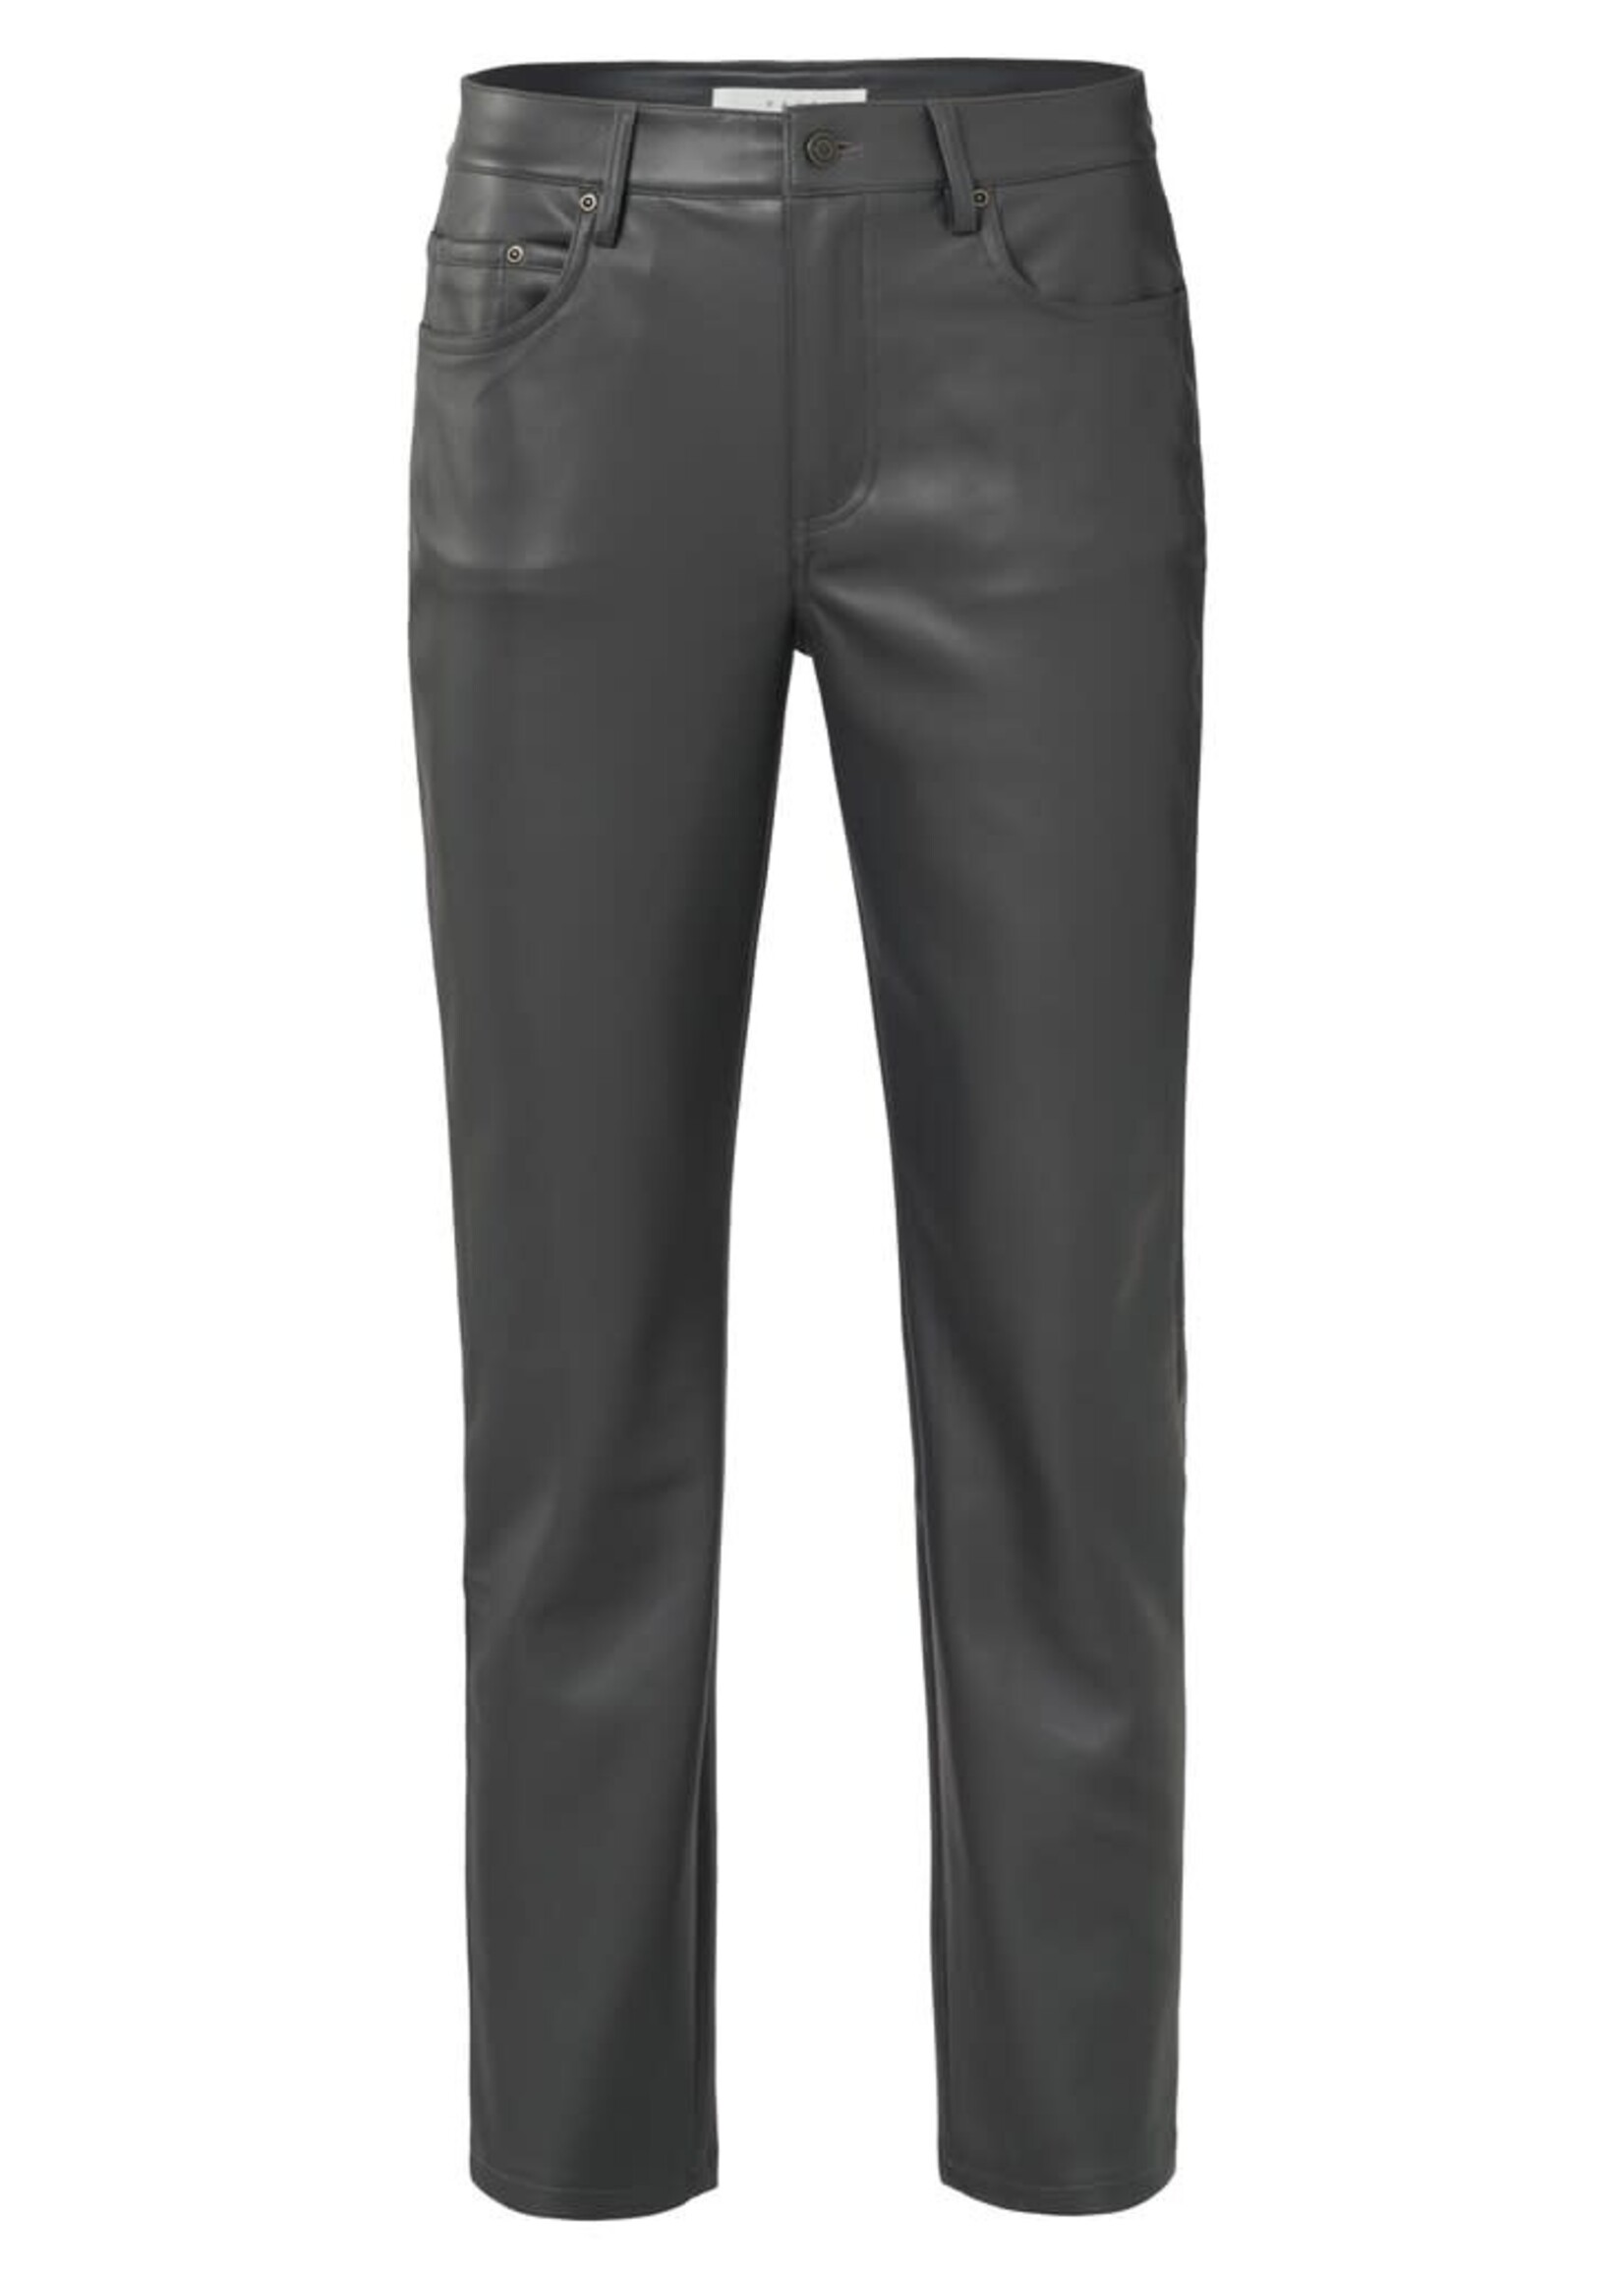 Yaya Yaya, Faux leather trousers, 5 pocket style, zip fly, Pinstripe Grey, Size: